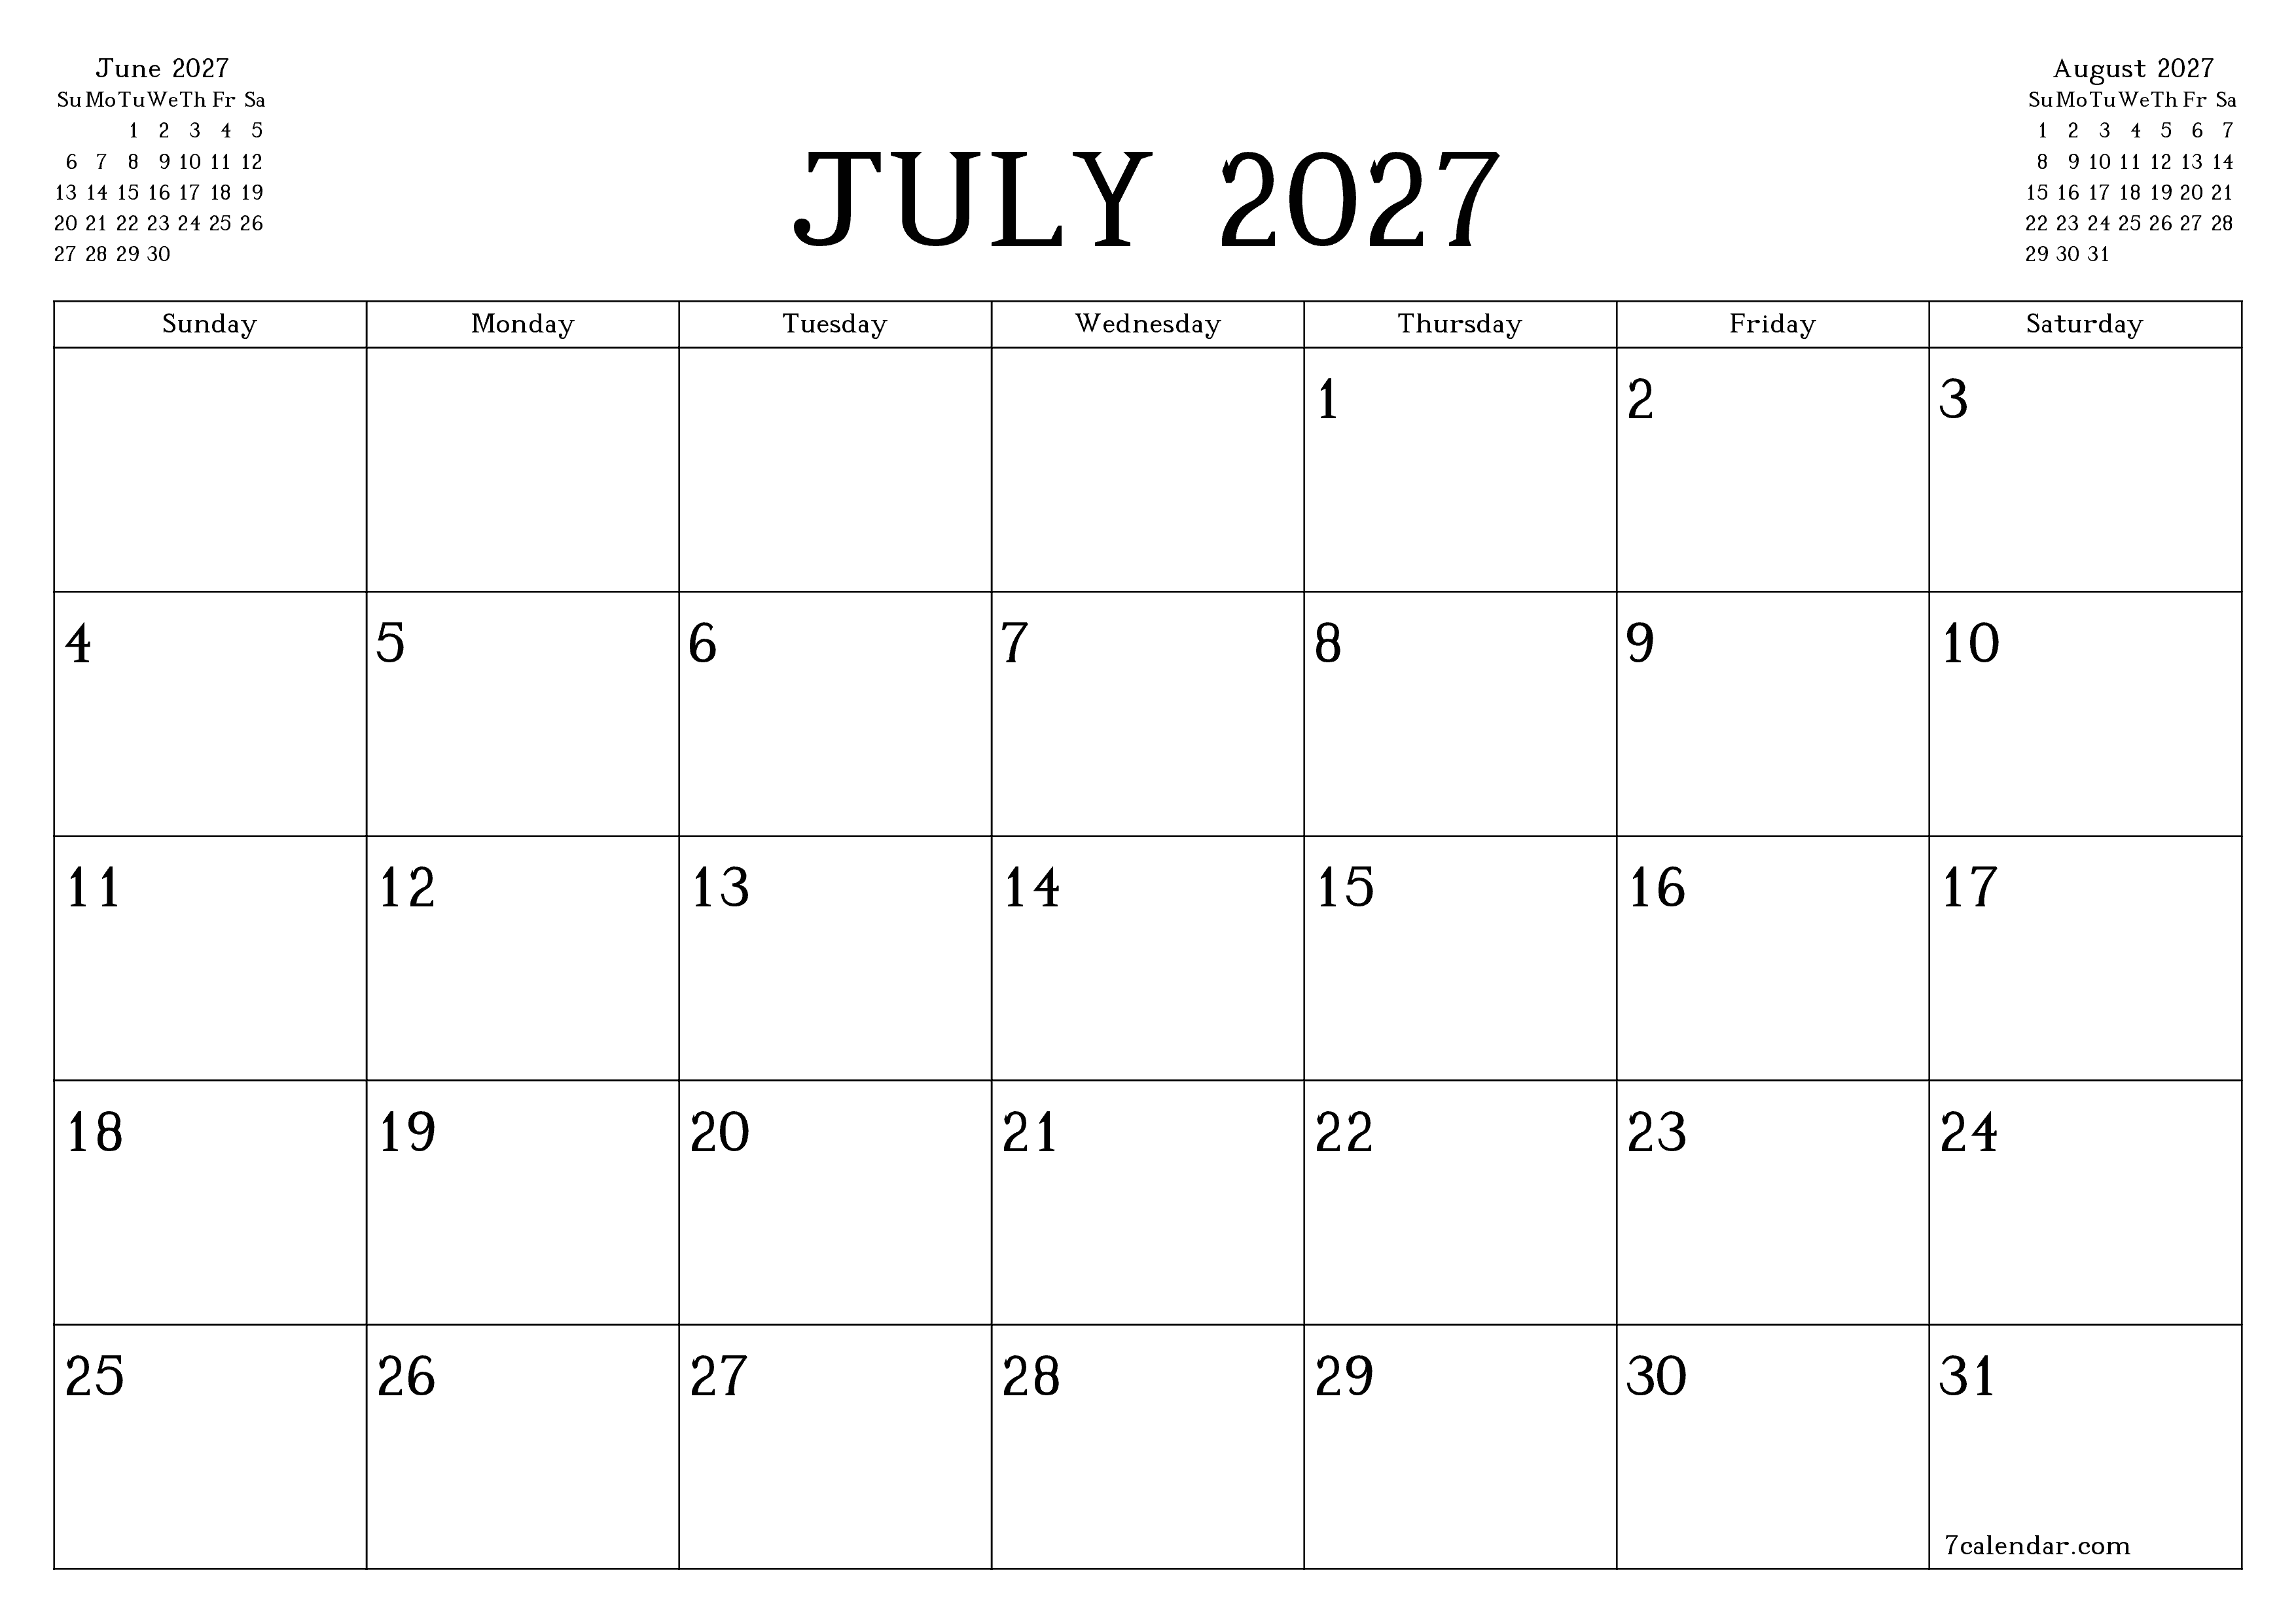 Blank calendar July 2027